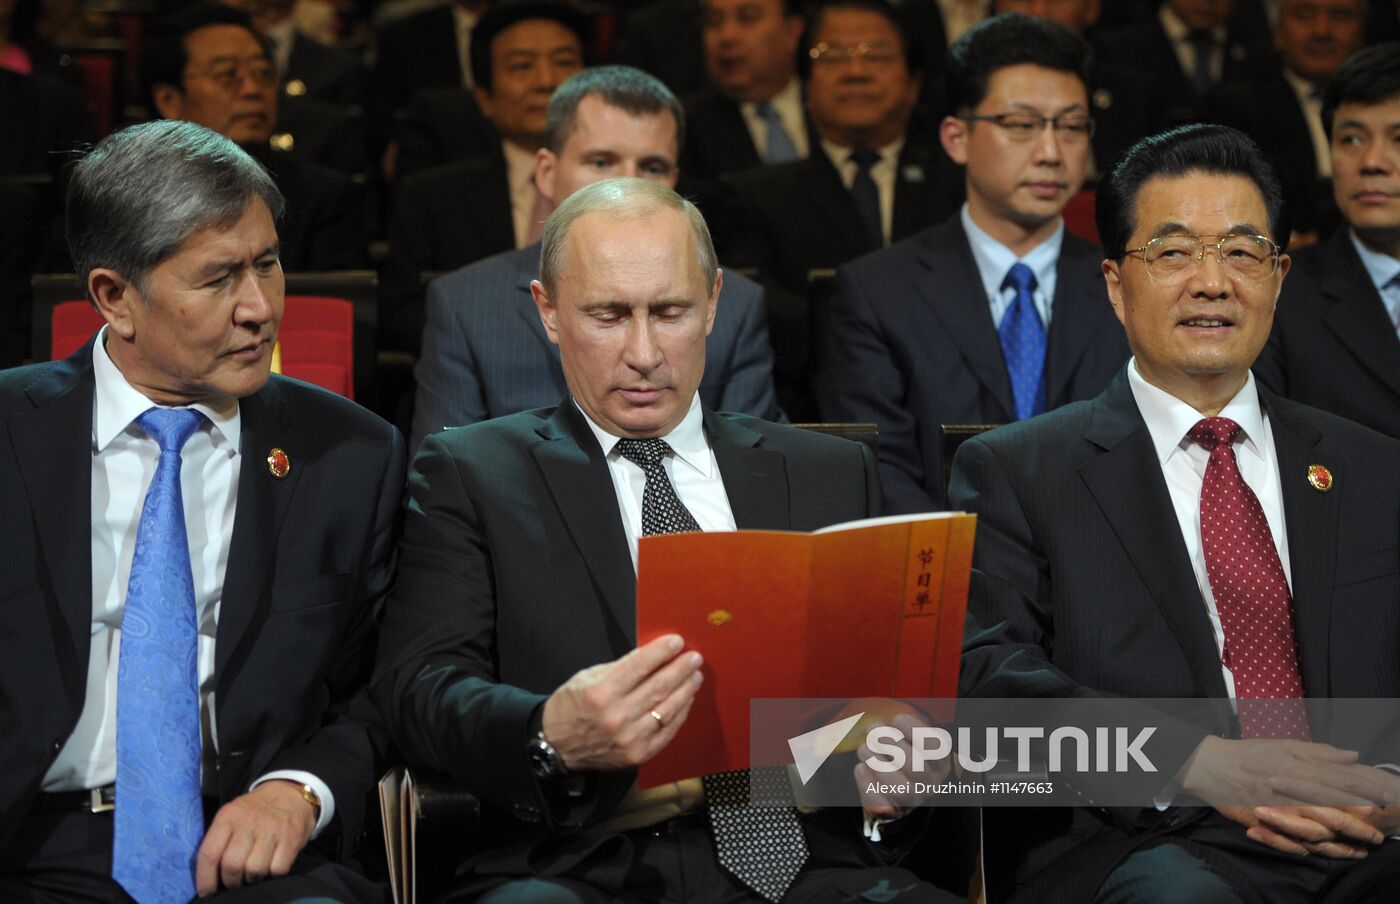 President Vladimir Putin's official visit to China